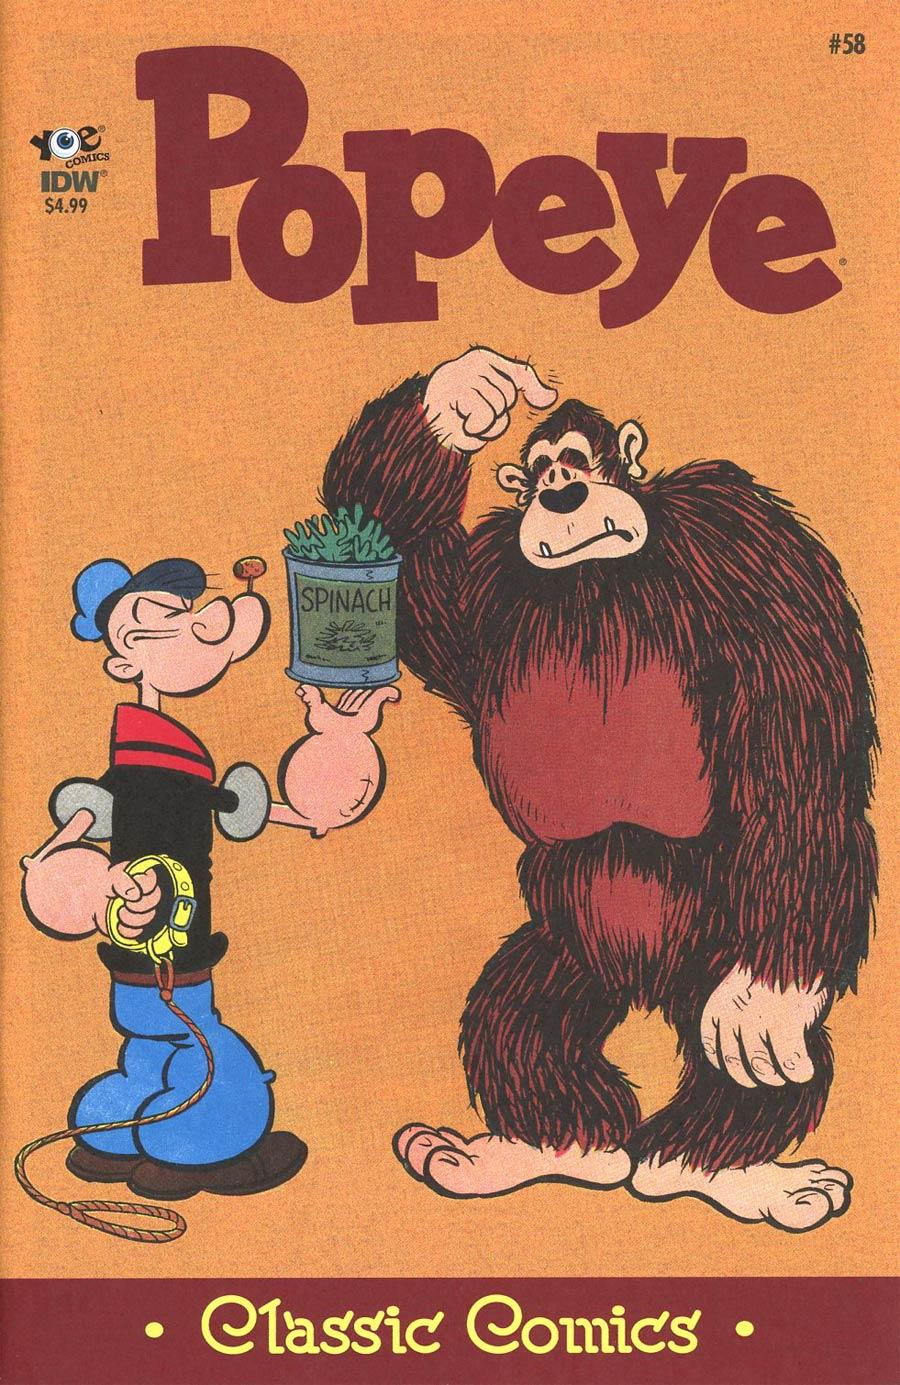 Classic Popeye Vol. 1 #58